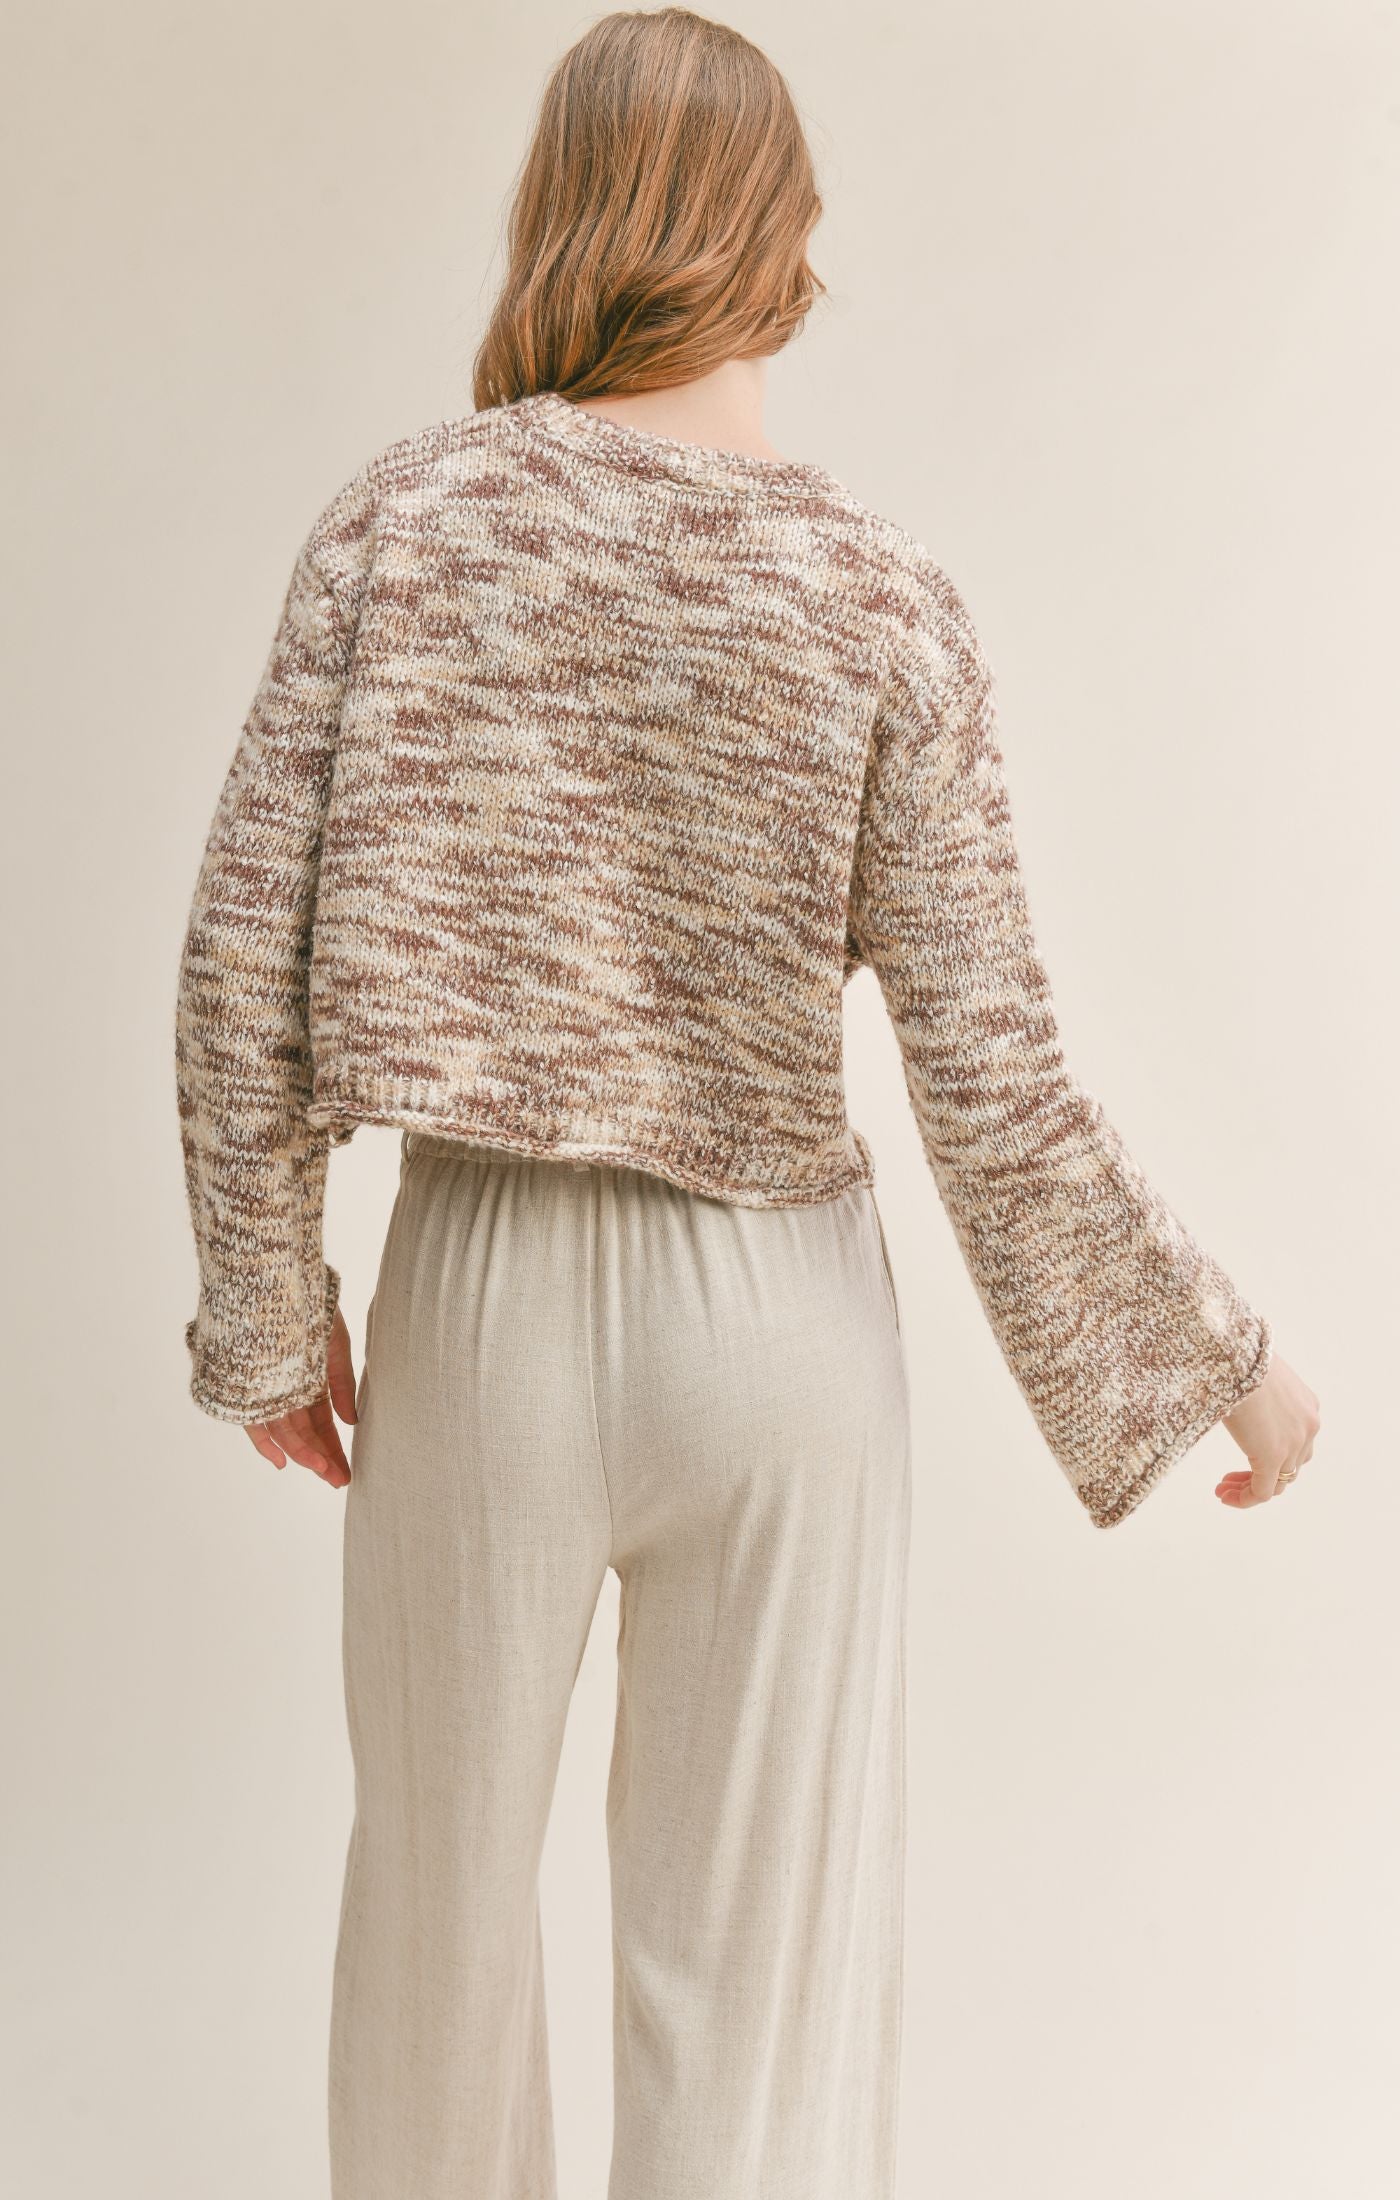 The Gabriella Bell Sleeve Sweater